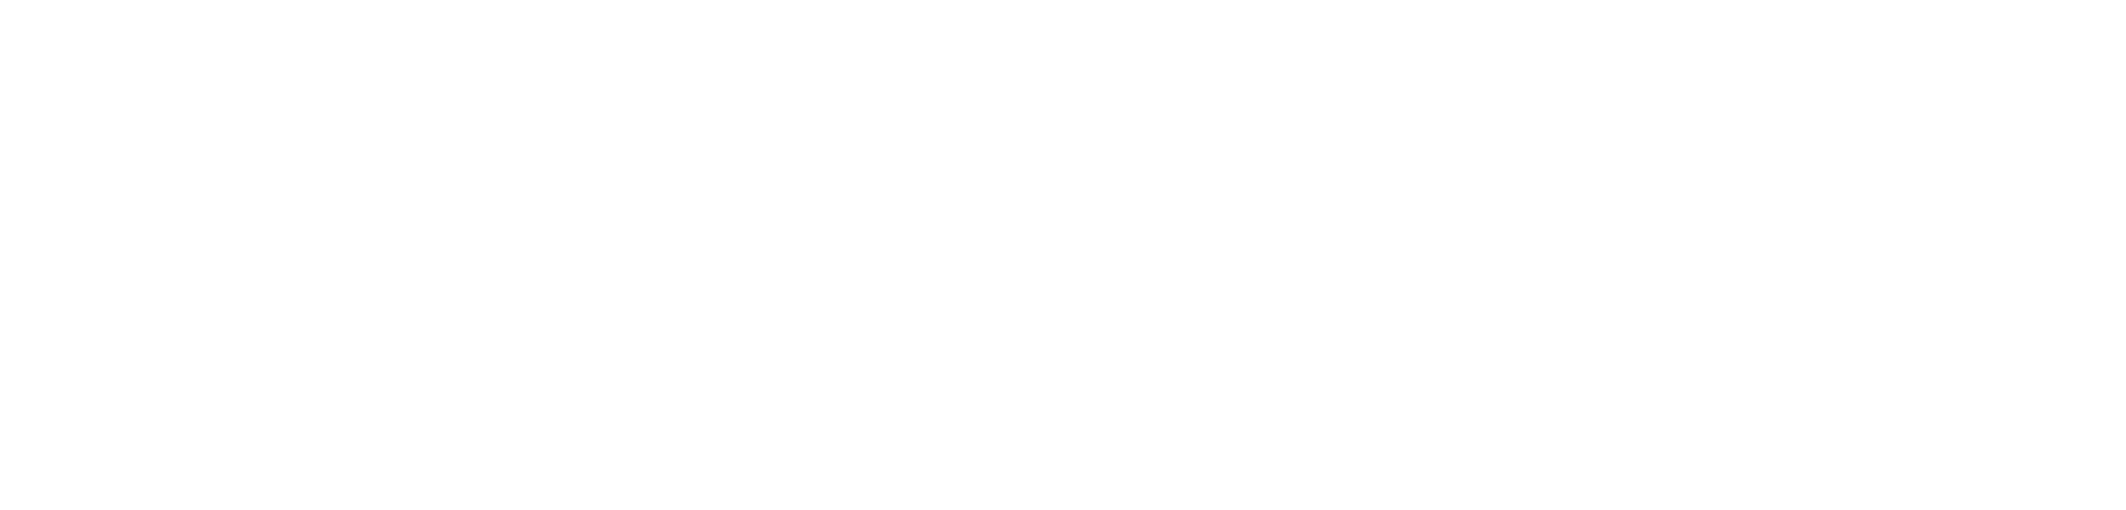 Public Safety's Premier Technology Conference